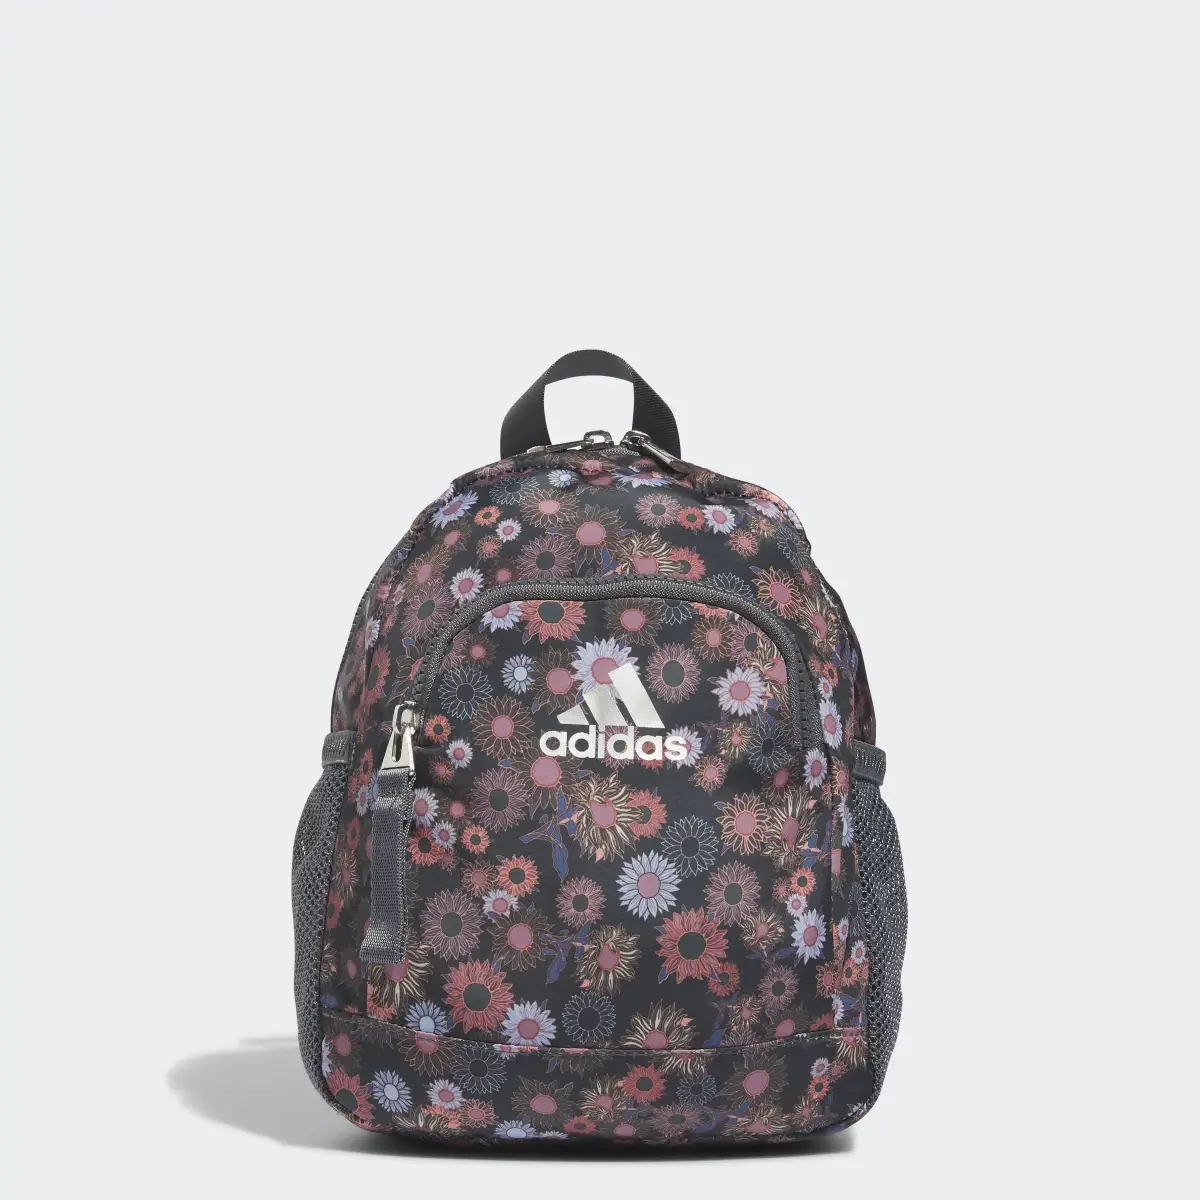 Adidas Linear 3 Mini Backpack. 1